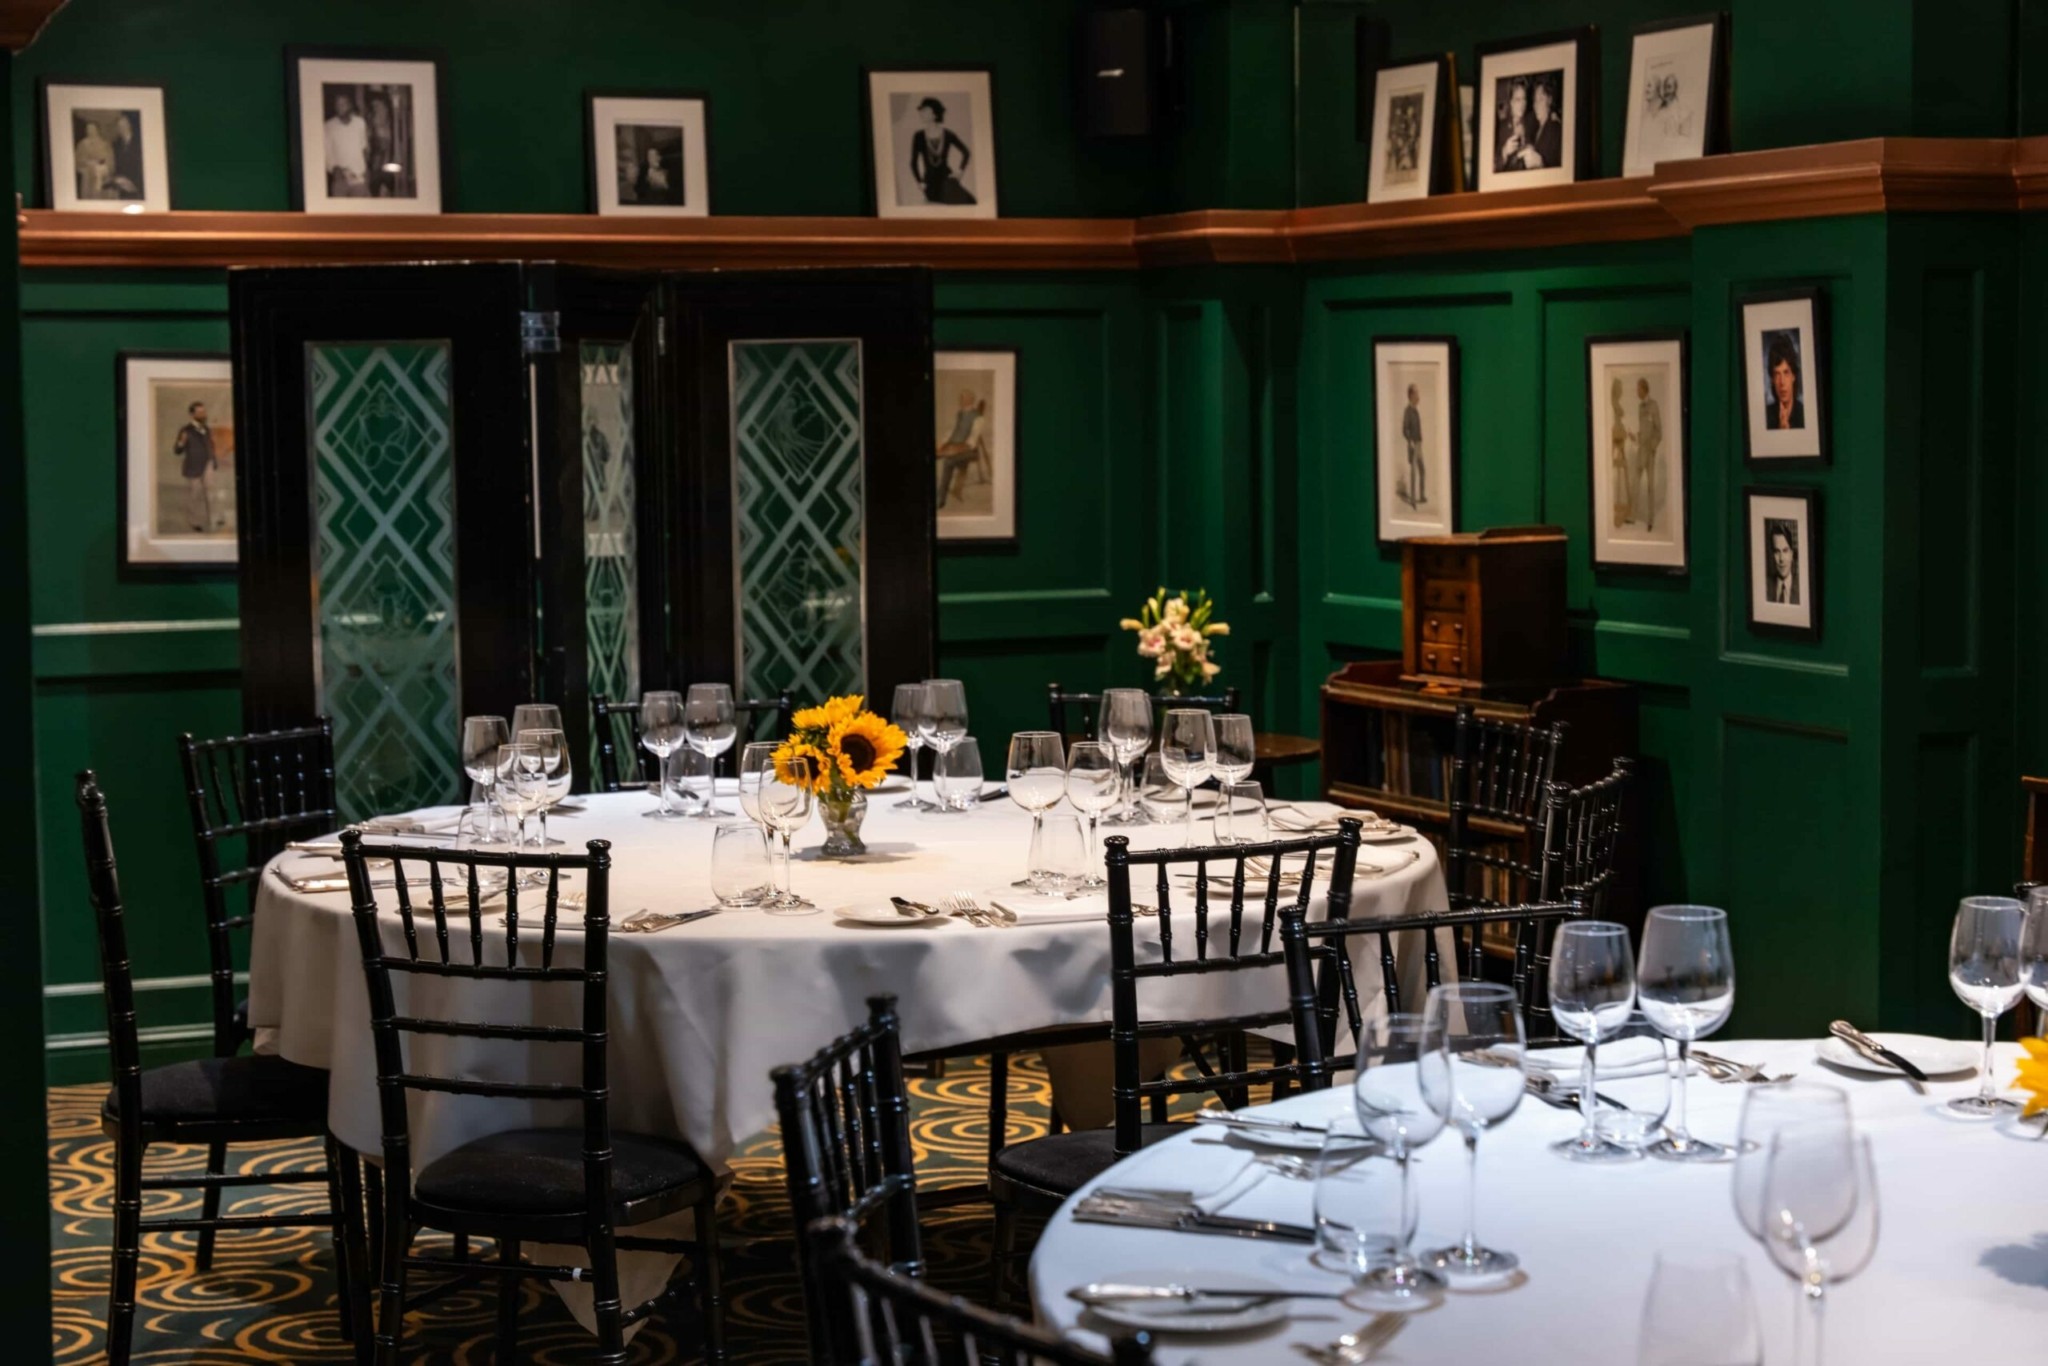 L’Escargot: Η εμπειρία στο παλαιότερο γαλλικό εστιατόριο του Λονδίνου